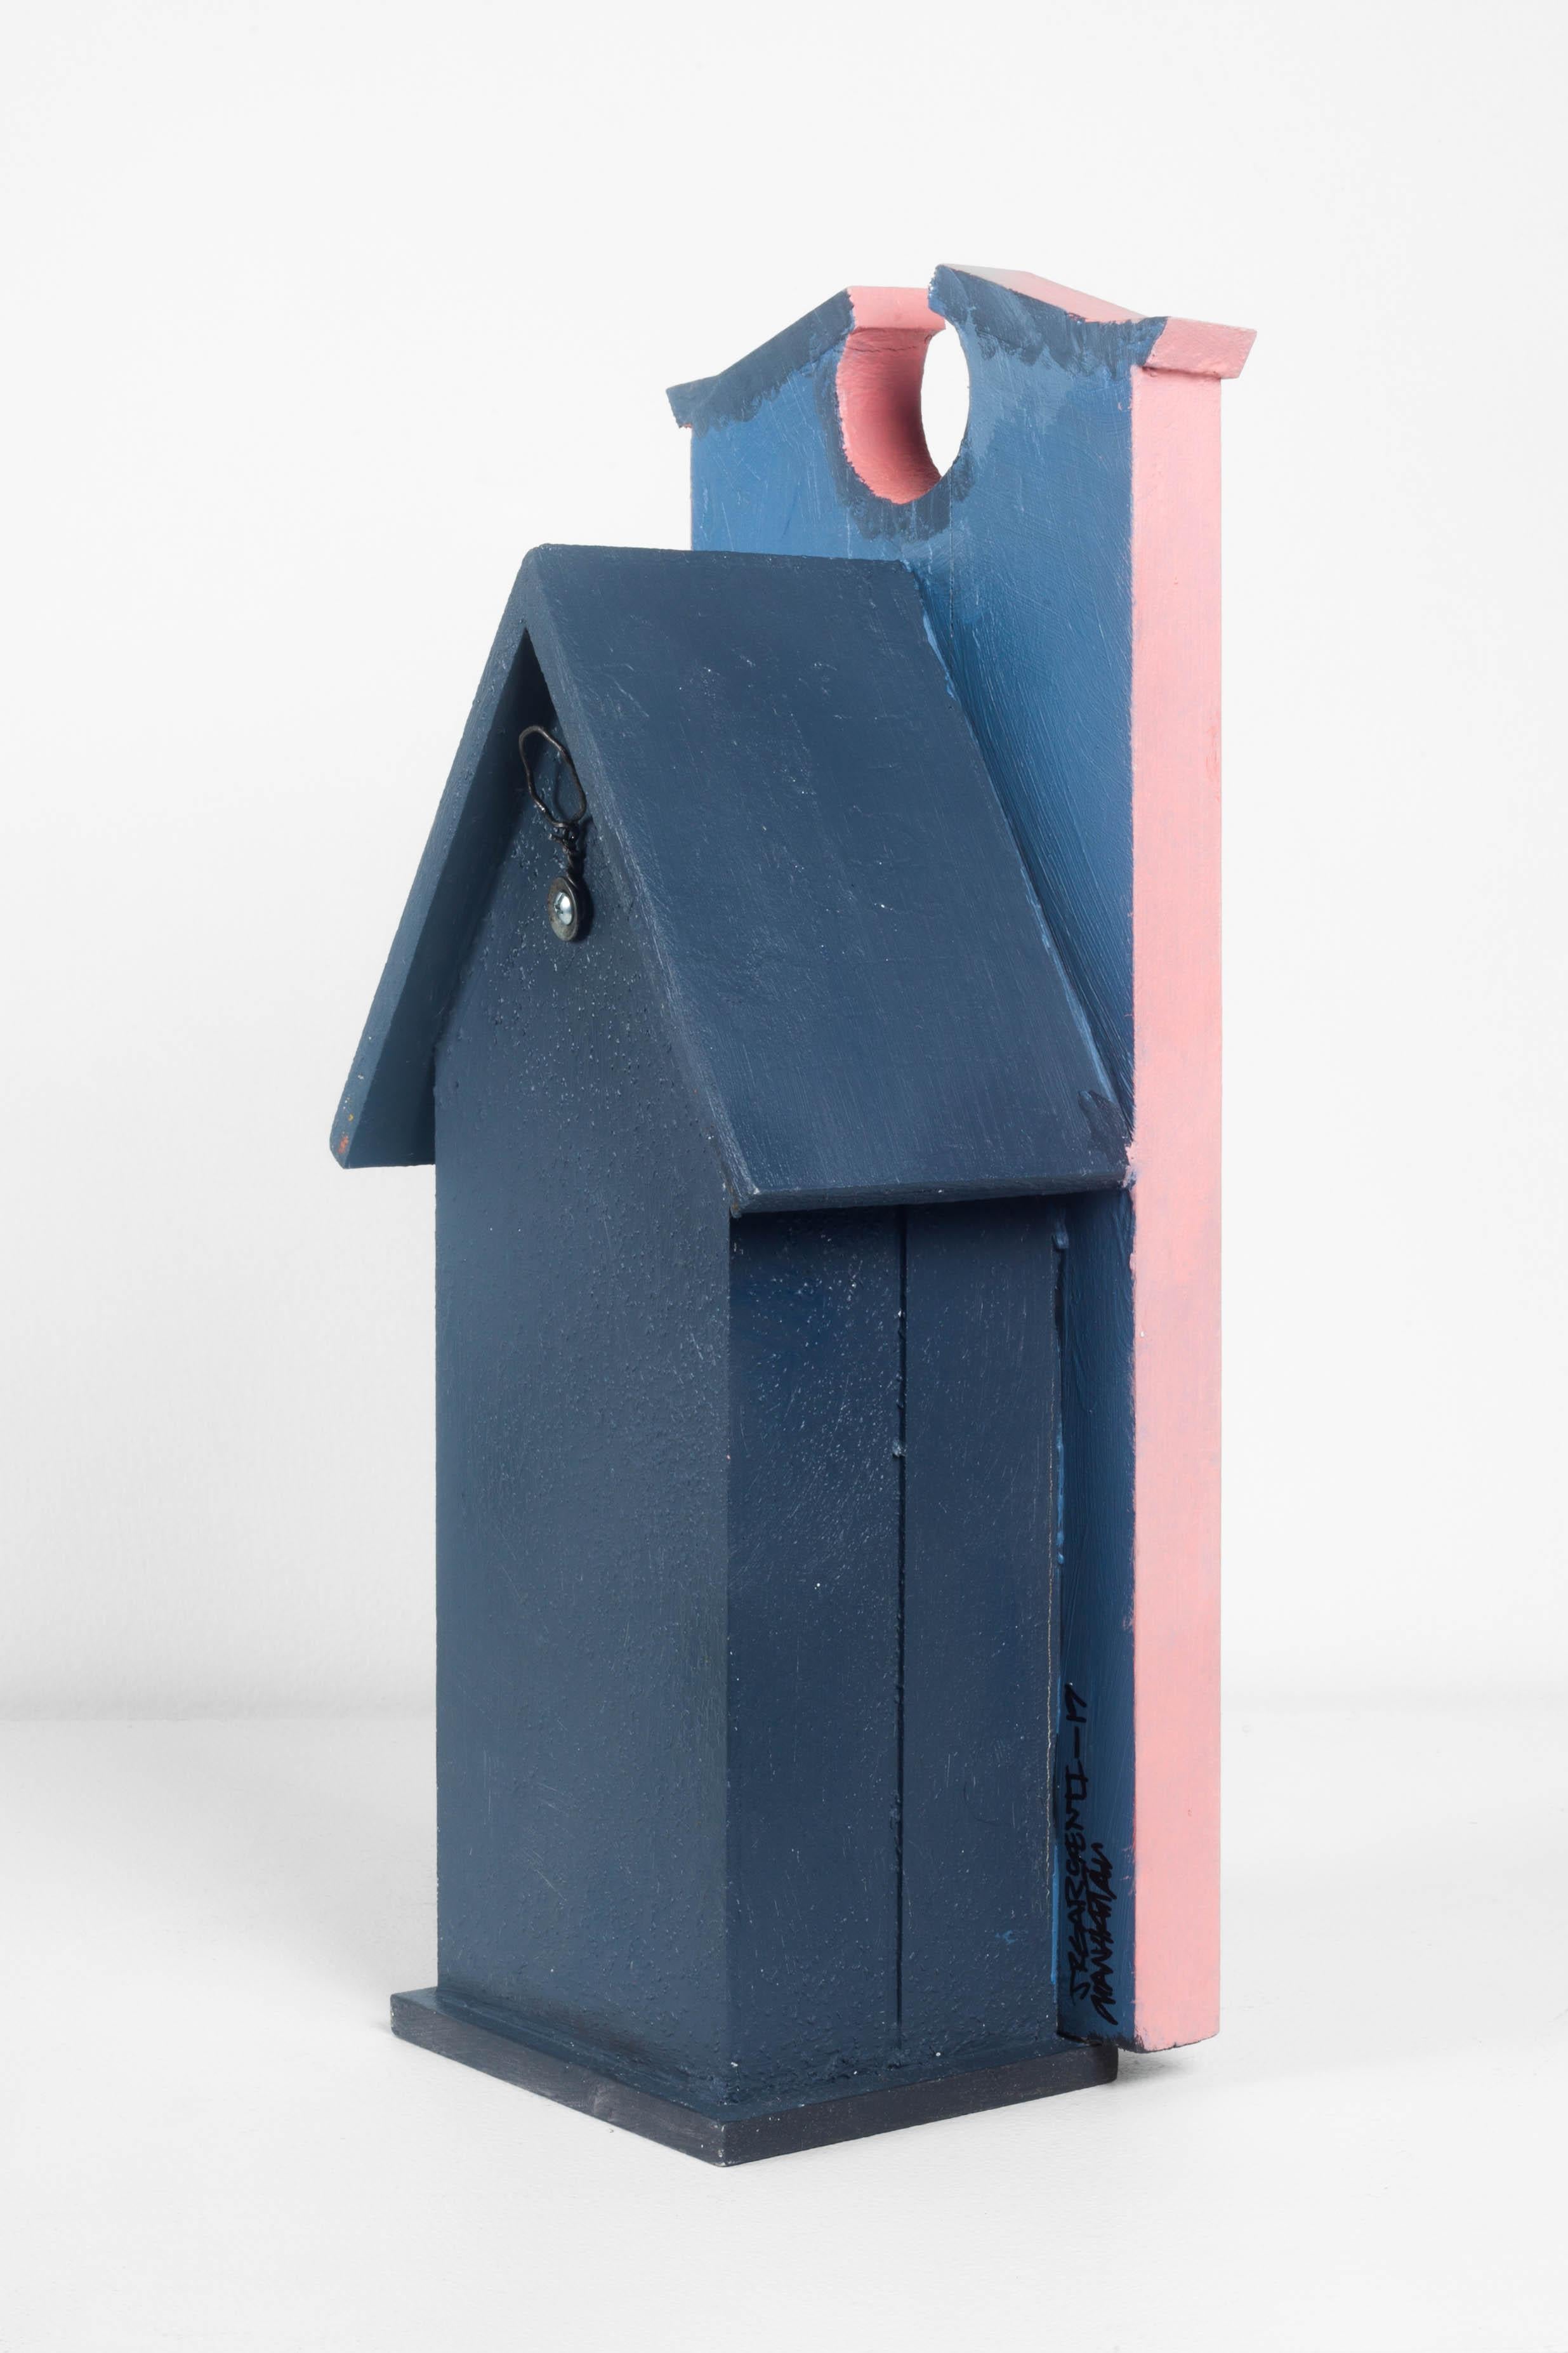 American The Manhattan birdhouse by Jason Sargenti, 2020 USA For Sale